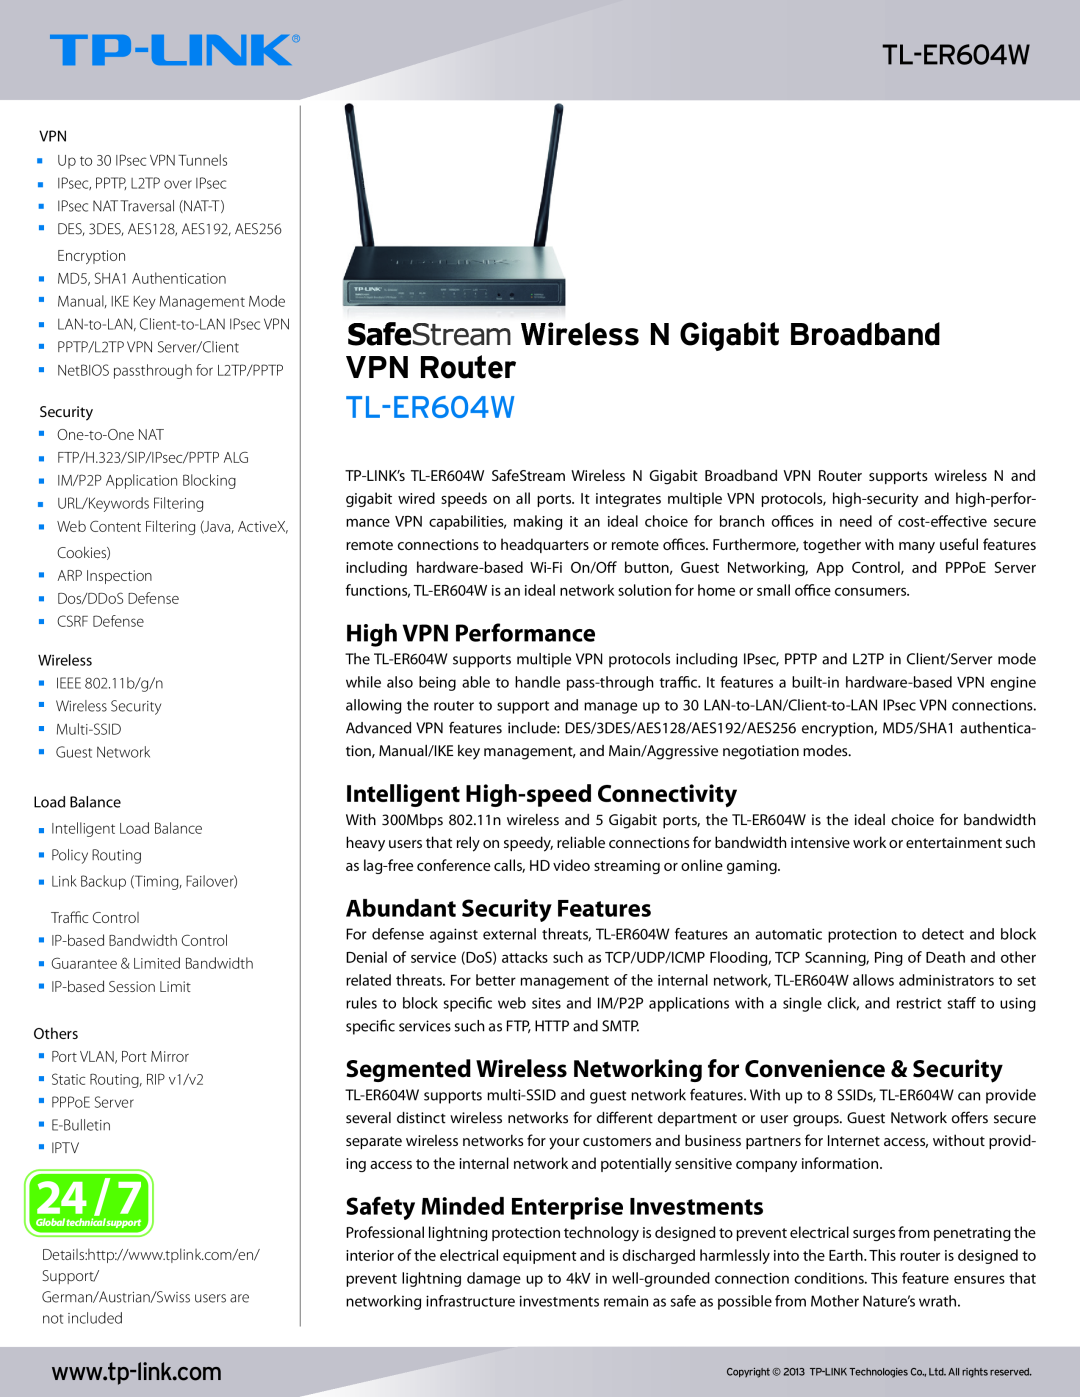 TP-Link TL-ER604W eless N Gigabit Broadband VPN Router, High VPN Performance, Intelligent High-speed Connectivity, Others 